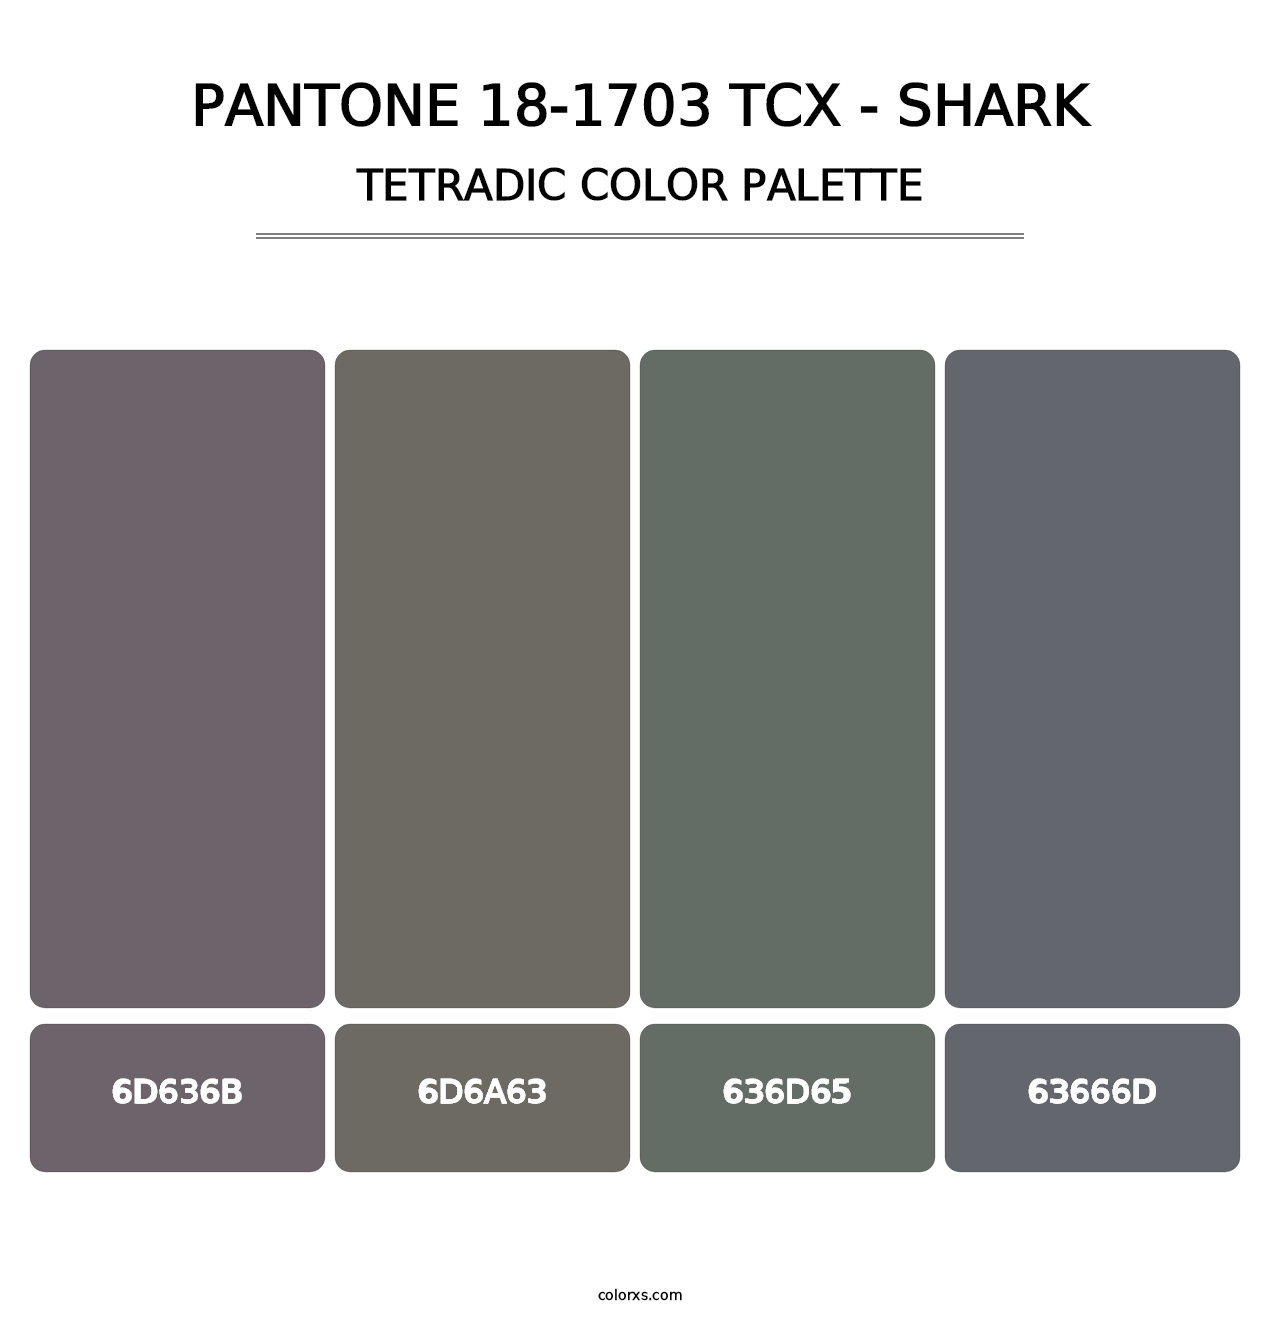 PANTONE 18-1703 TCX - Shark - Tetradic Color Palette